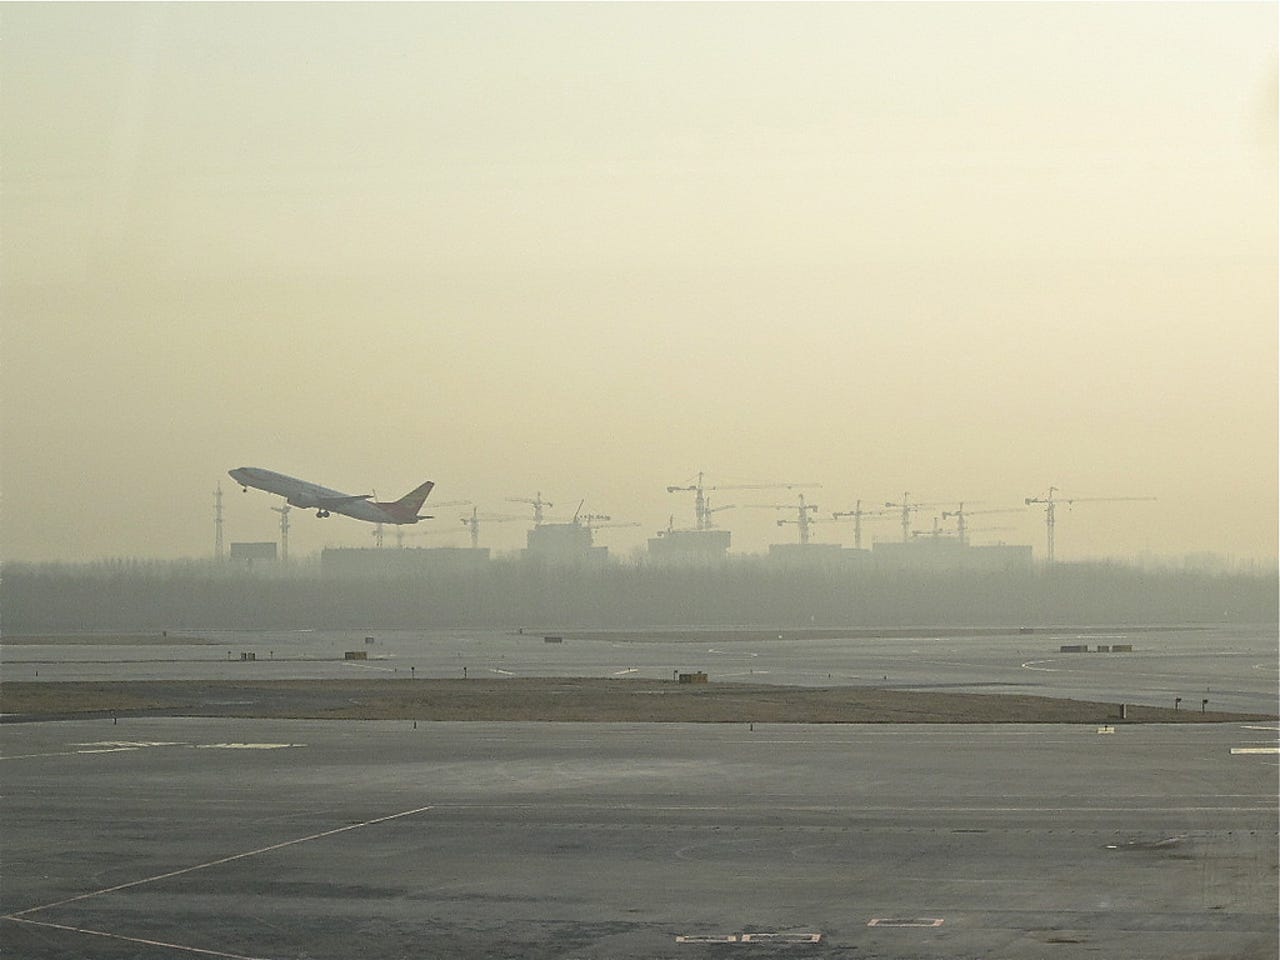 airplane-takeoff-beijing-china-flickr.jpg